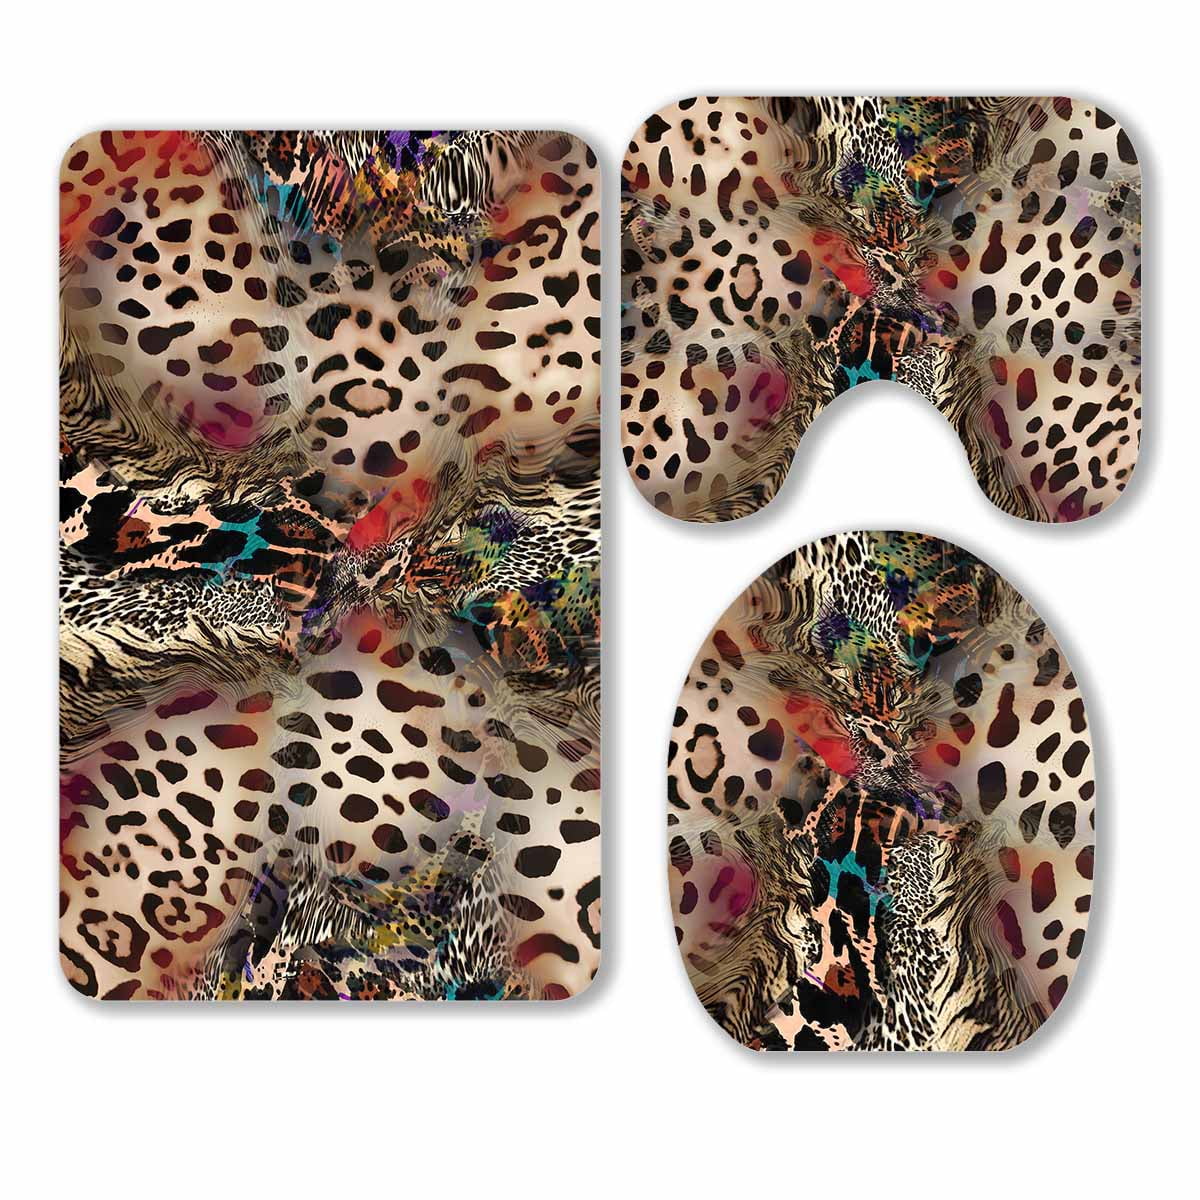 PKQWTM Animal print leopard 3 Piece Bathroom Rugs Set Bath